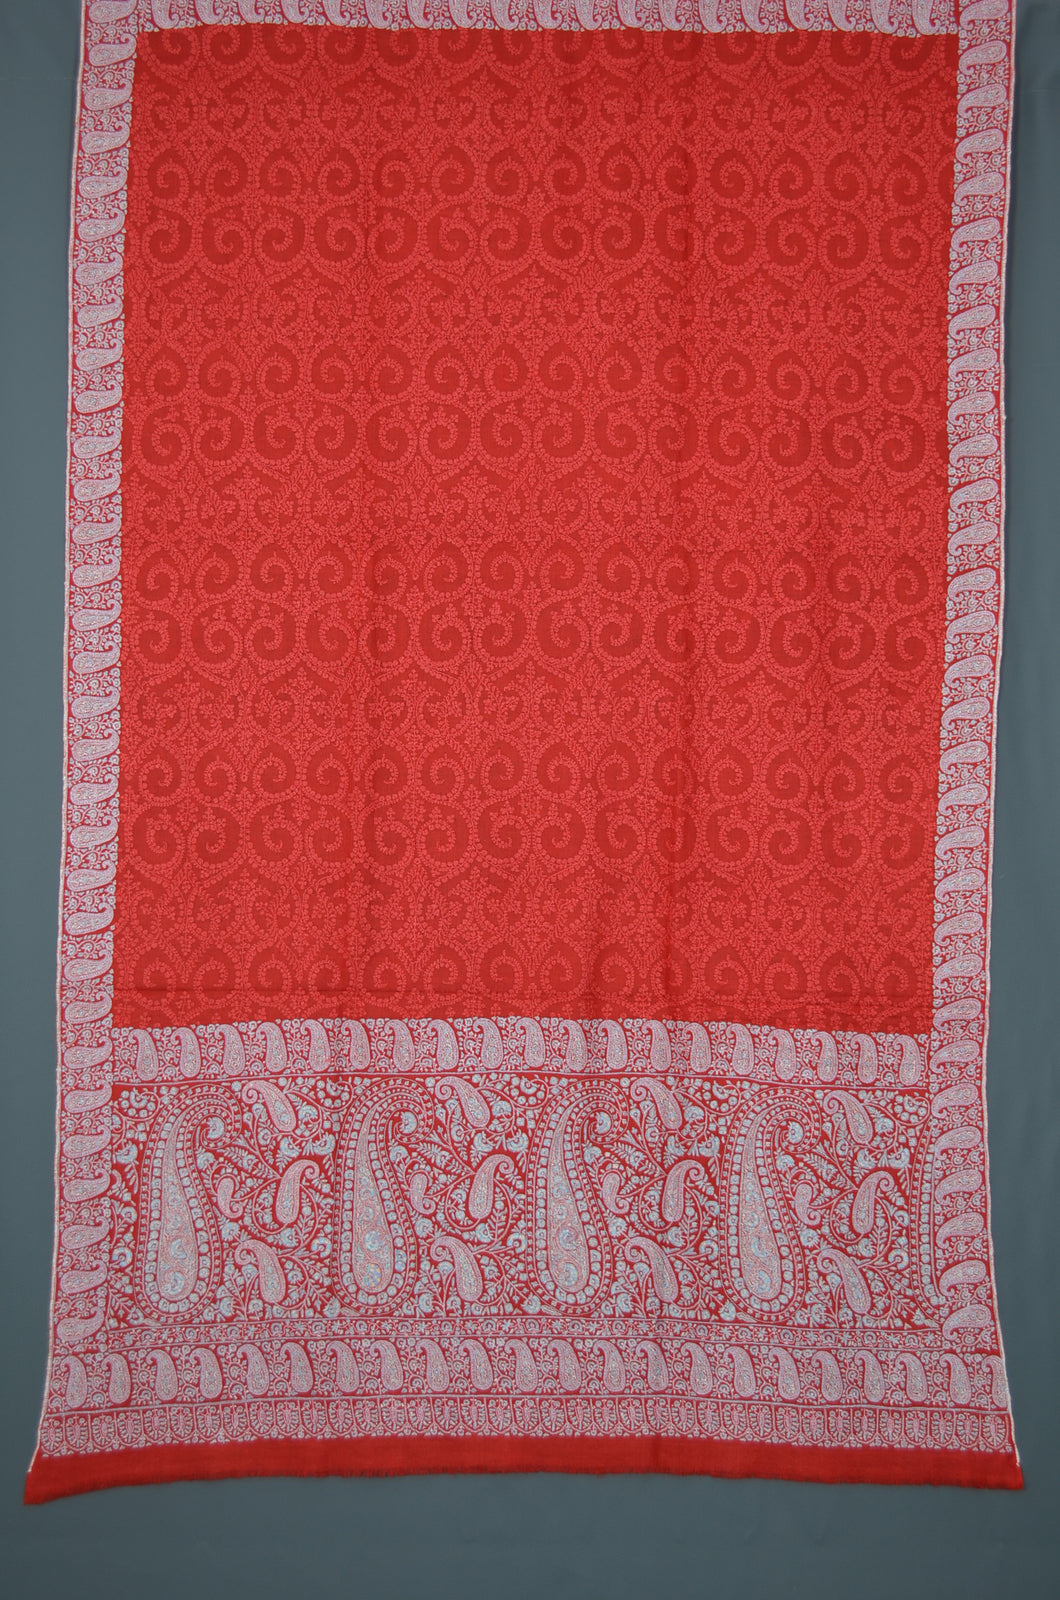 Red Jamawar Embroidery Cashmere Pashmina Shawl